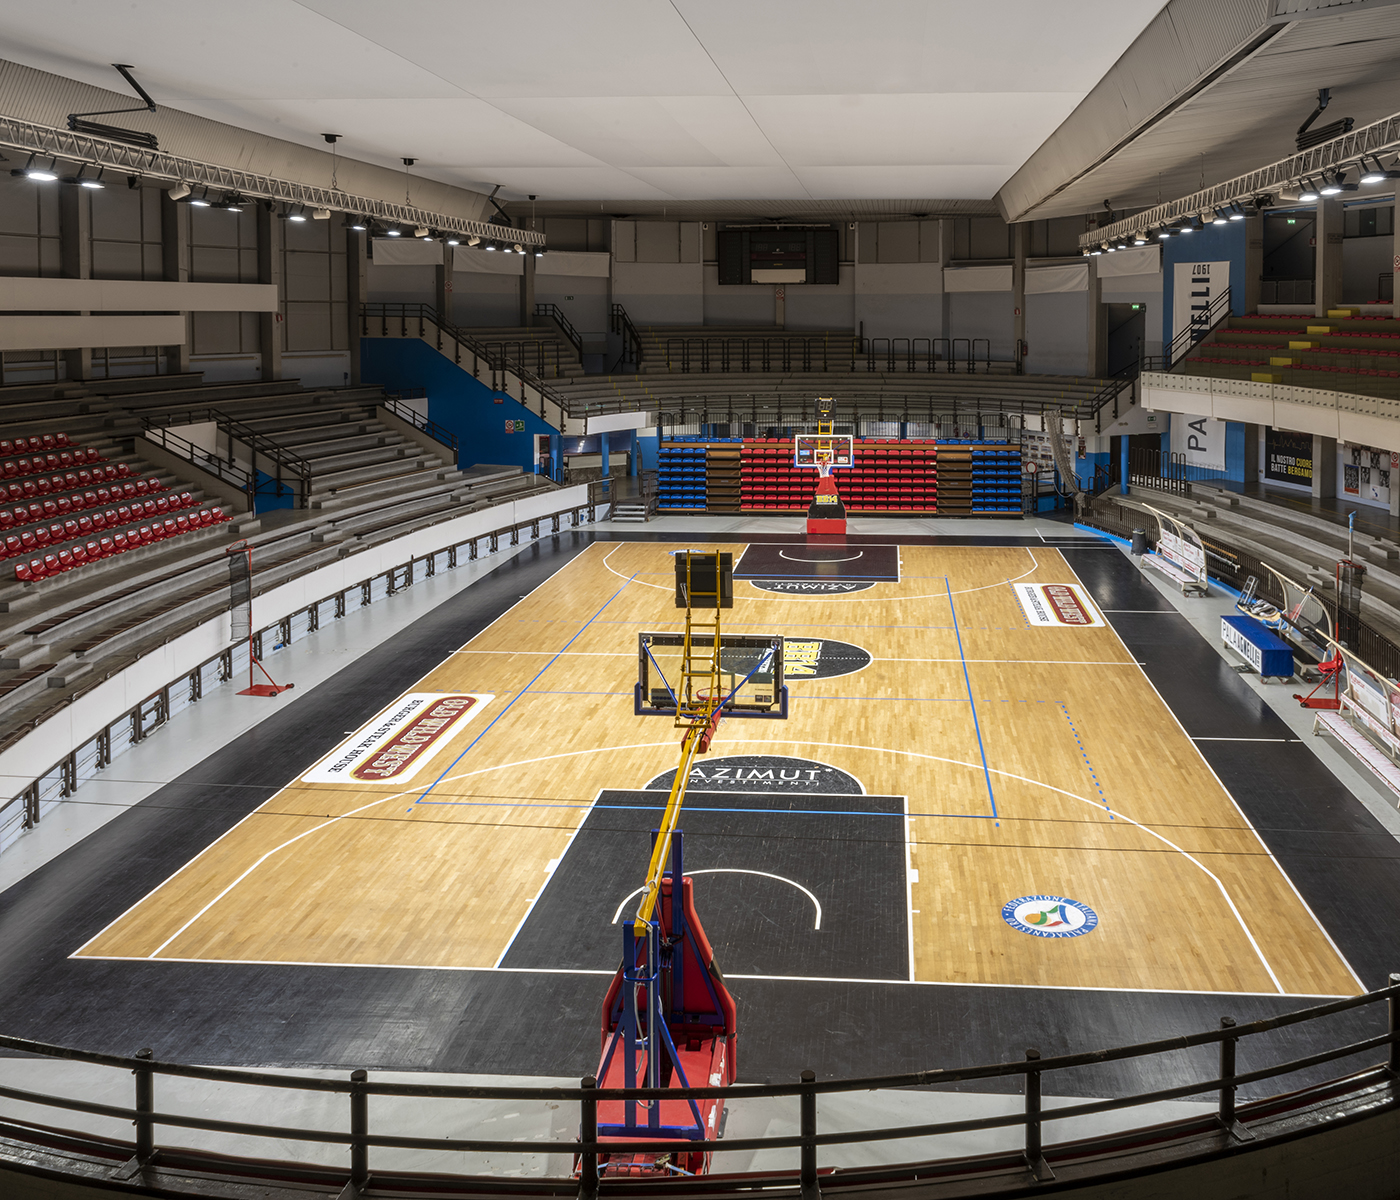 PalaAgnelli indoor sports facilitysport